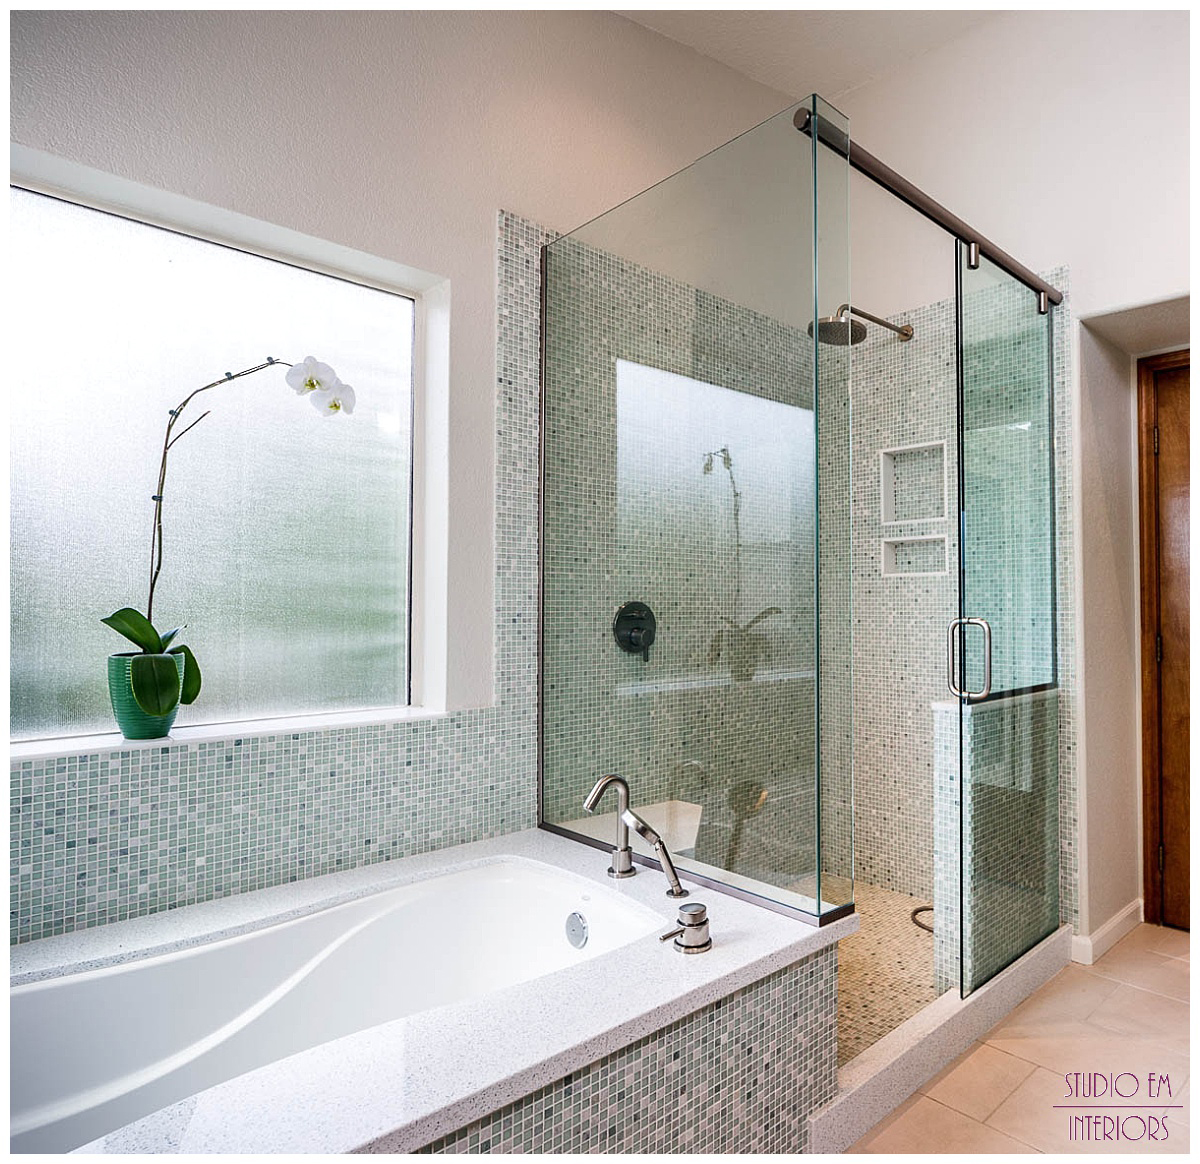 Chandler Spa Suite - Shower and Tub - Studio Em Interiors